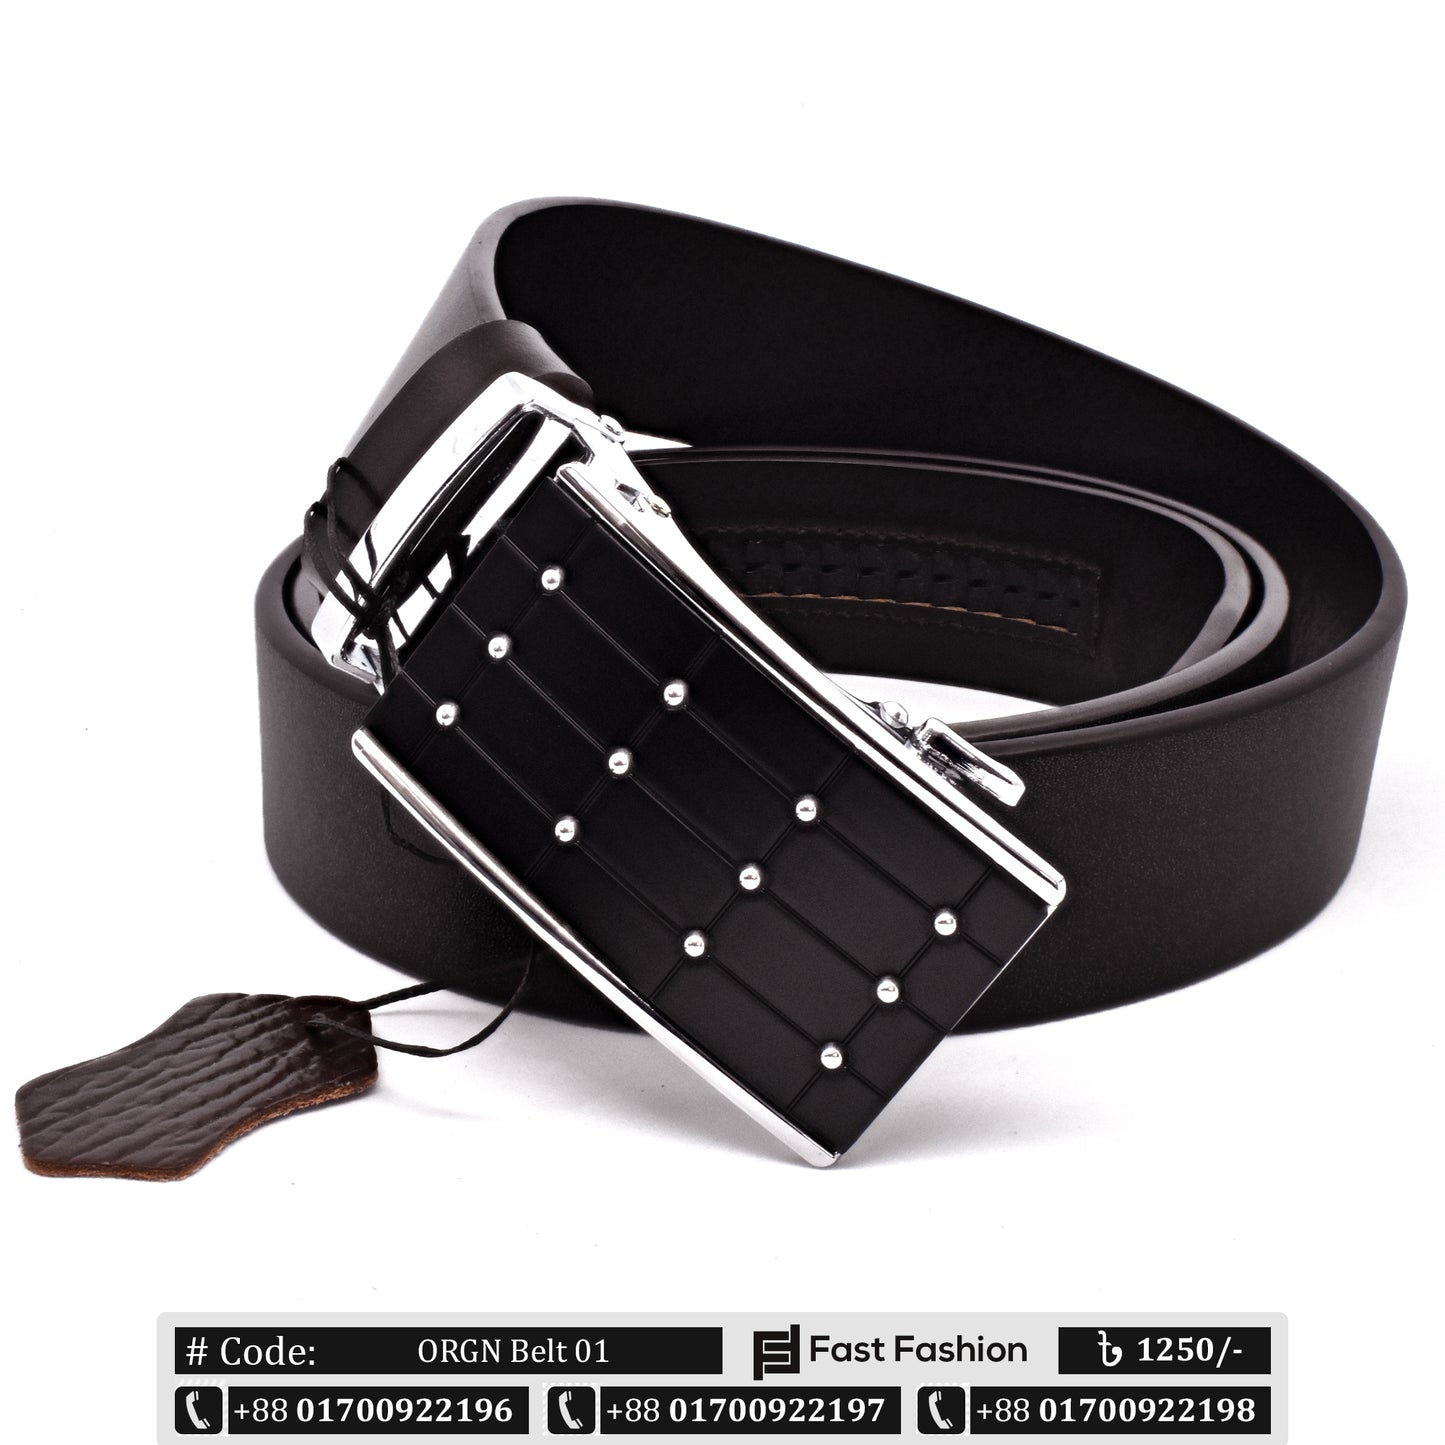 Premium Quality Original Leather Belt - ORGN Belt 01